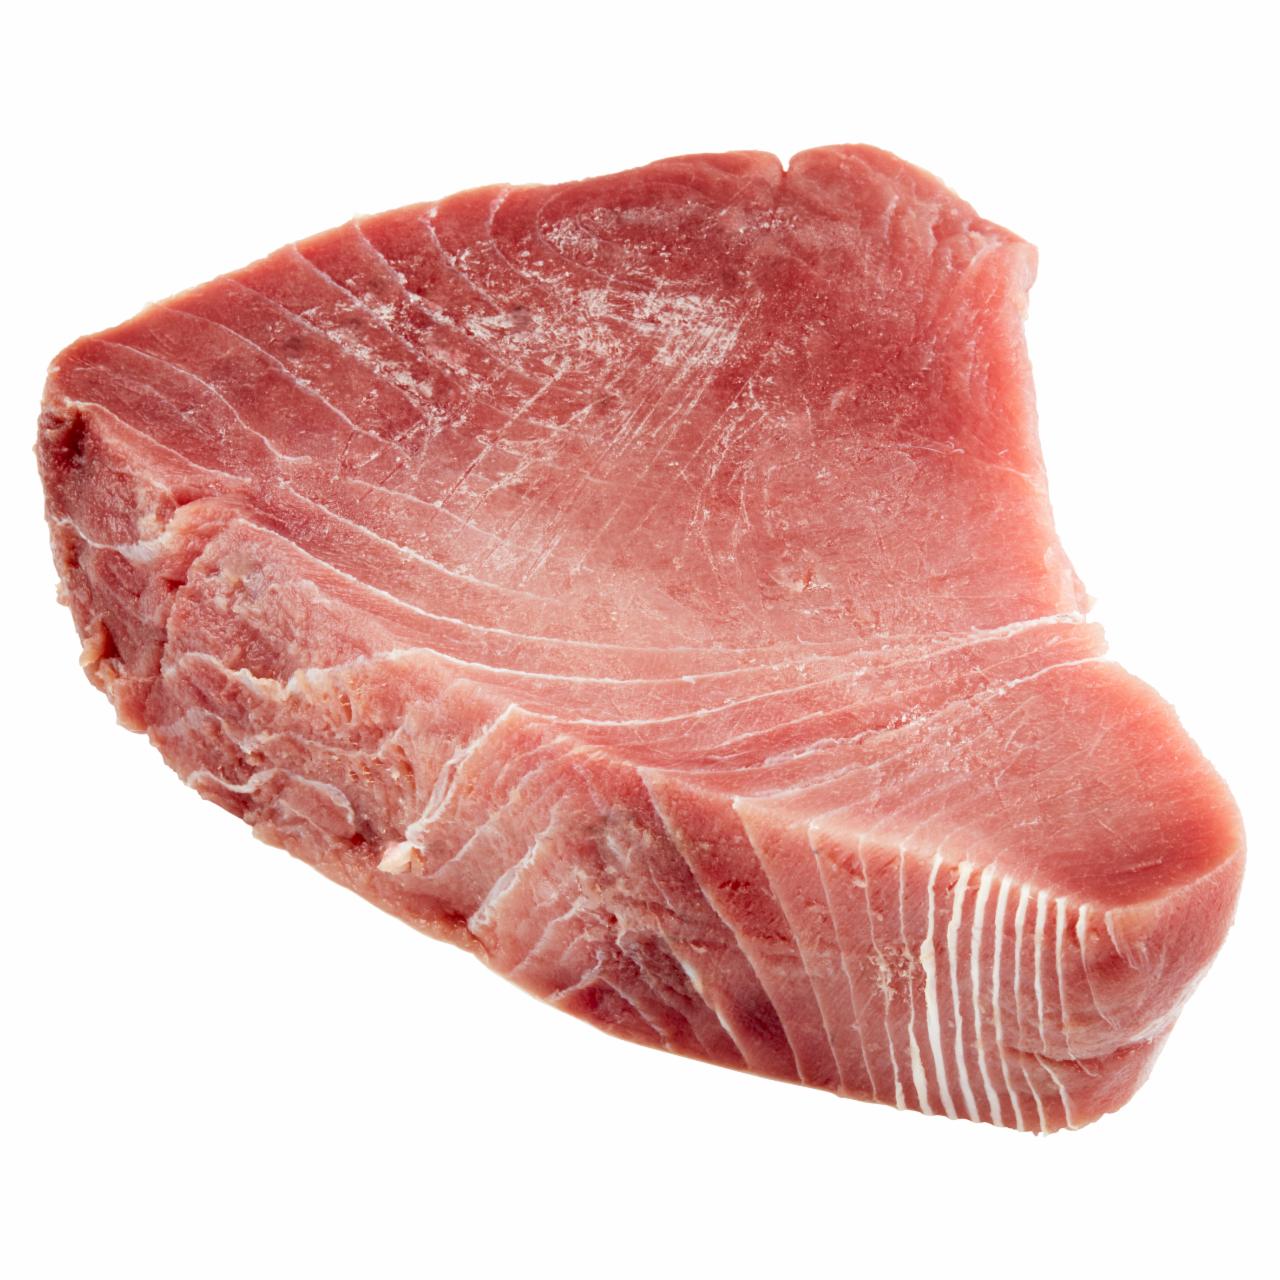 Képek - Vörös tonhal steak